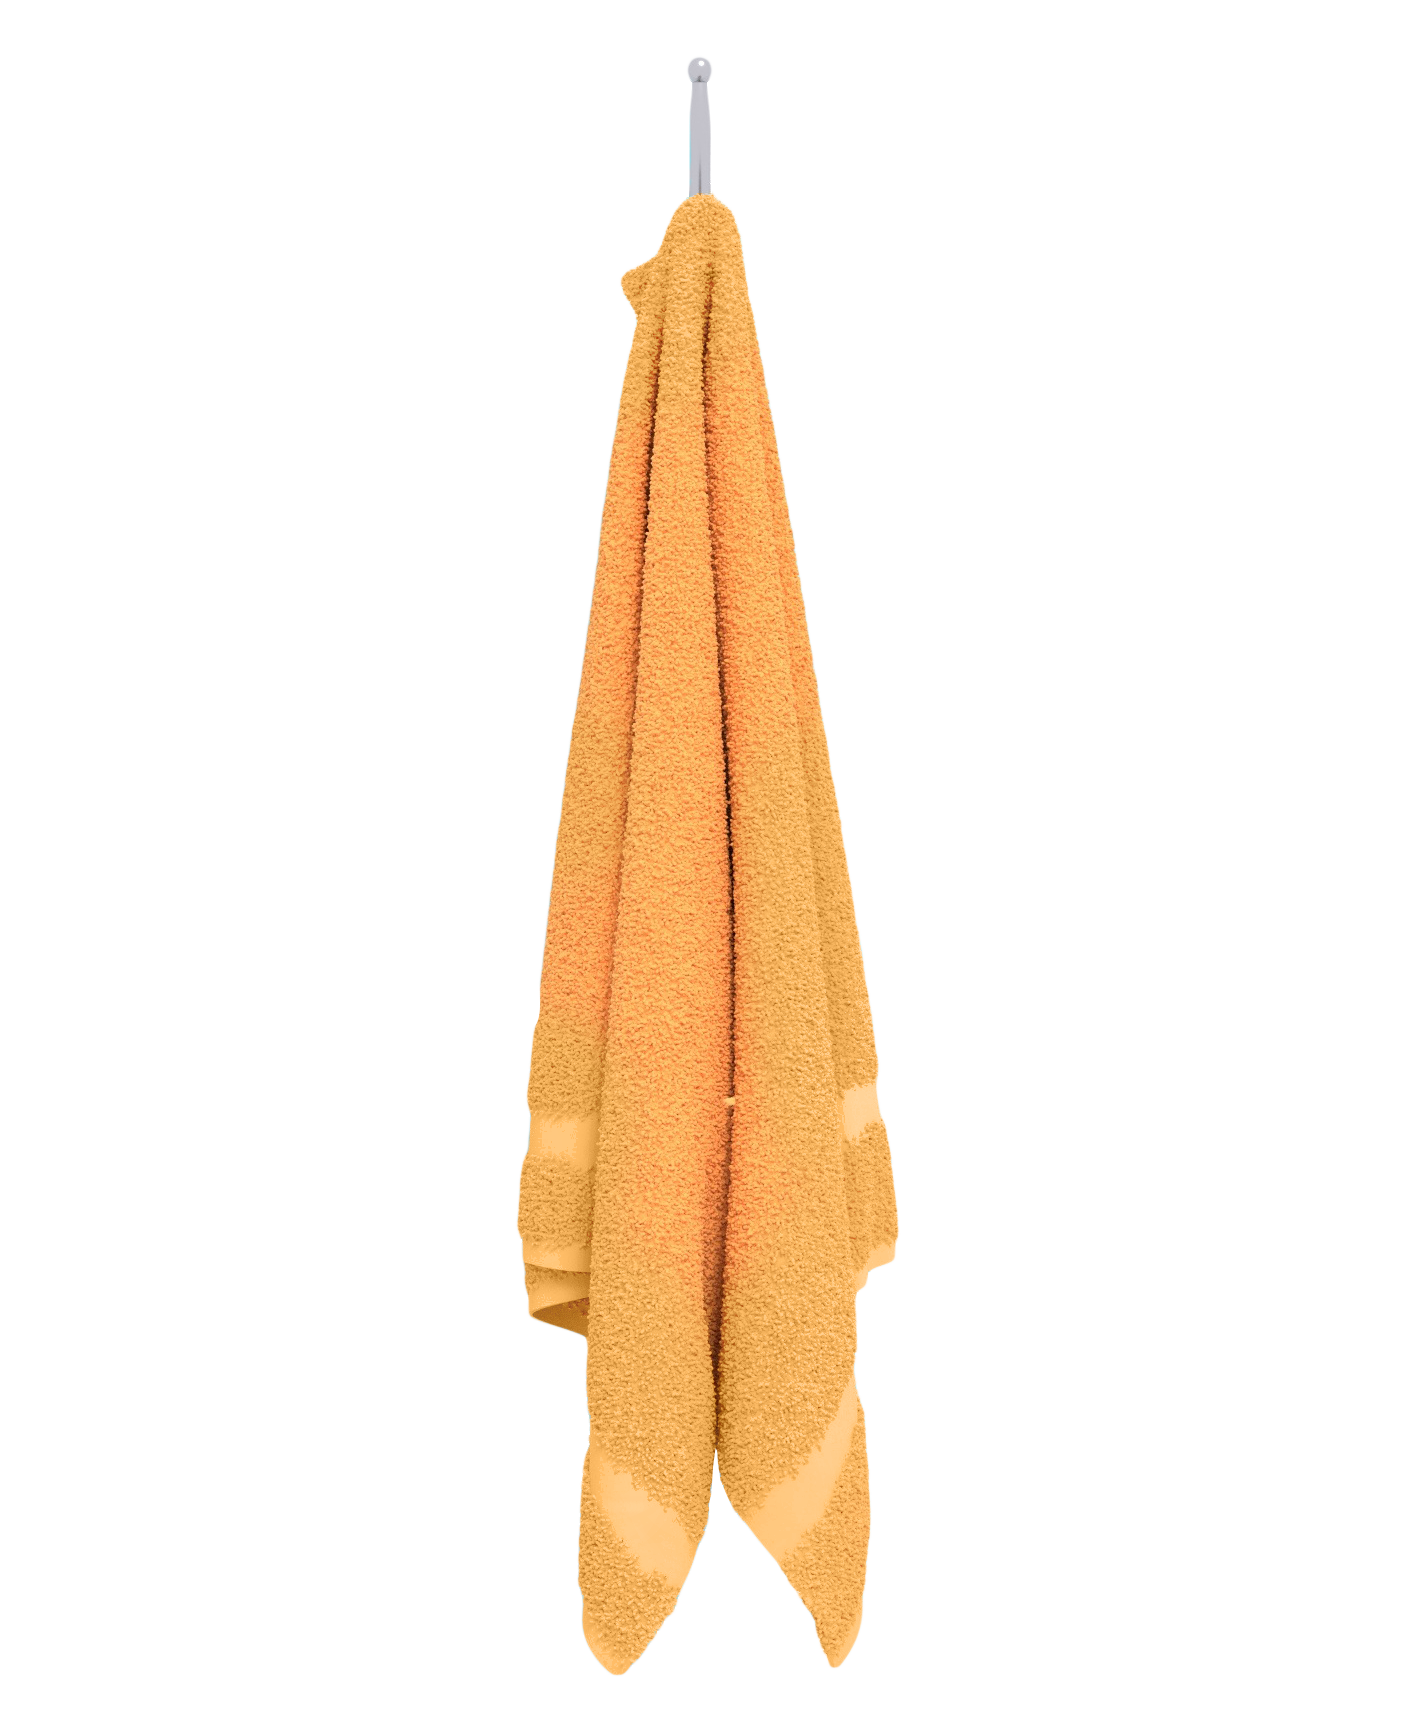 Towel Cloth PNG Free Image